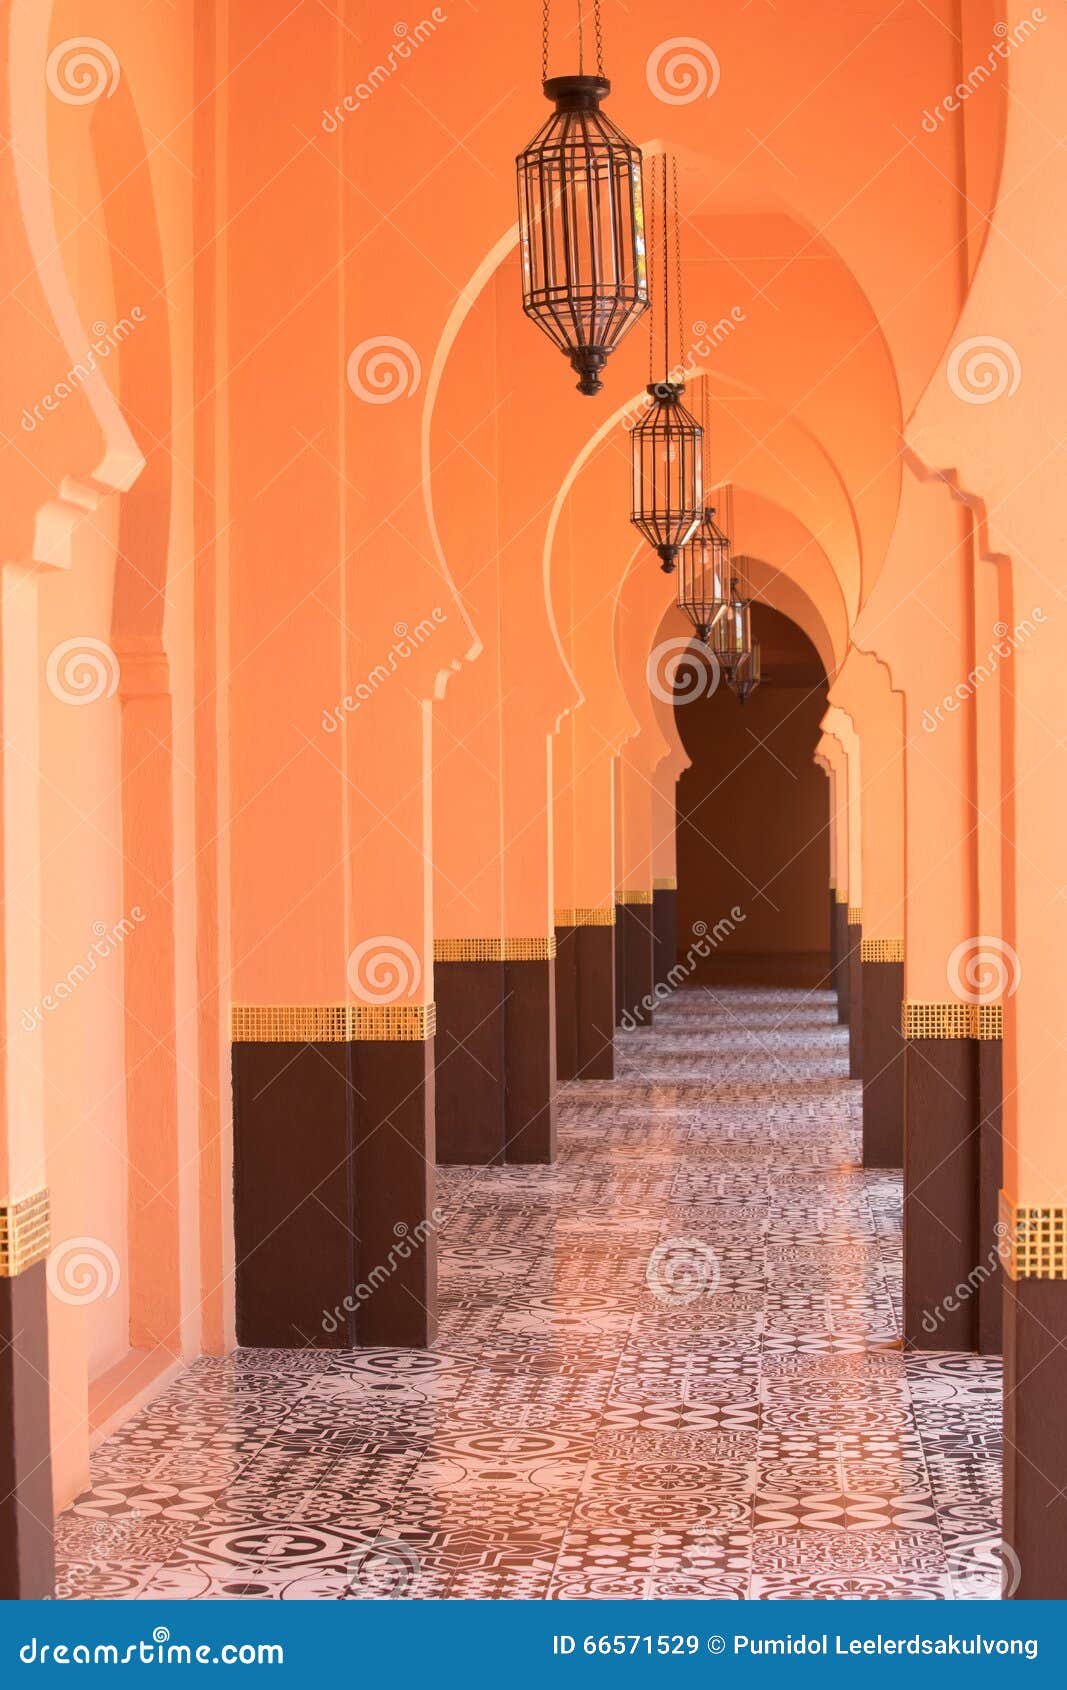 sandy arabic morrocco style corridor background